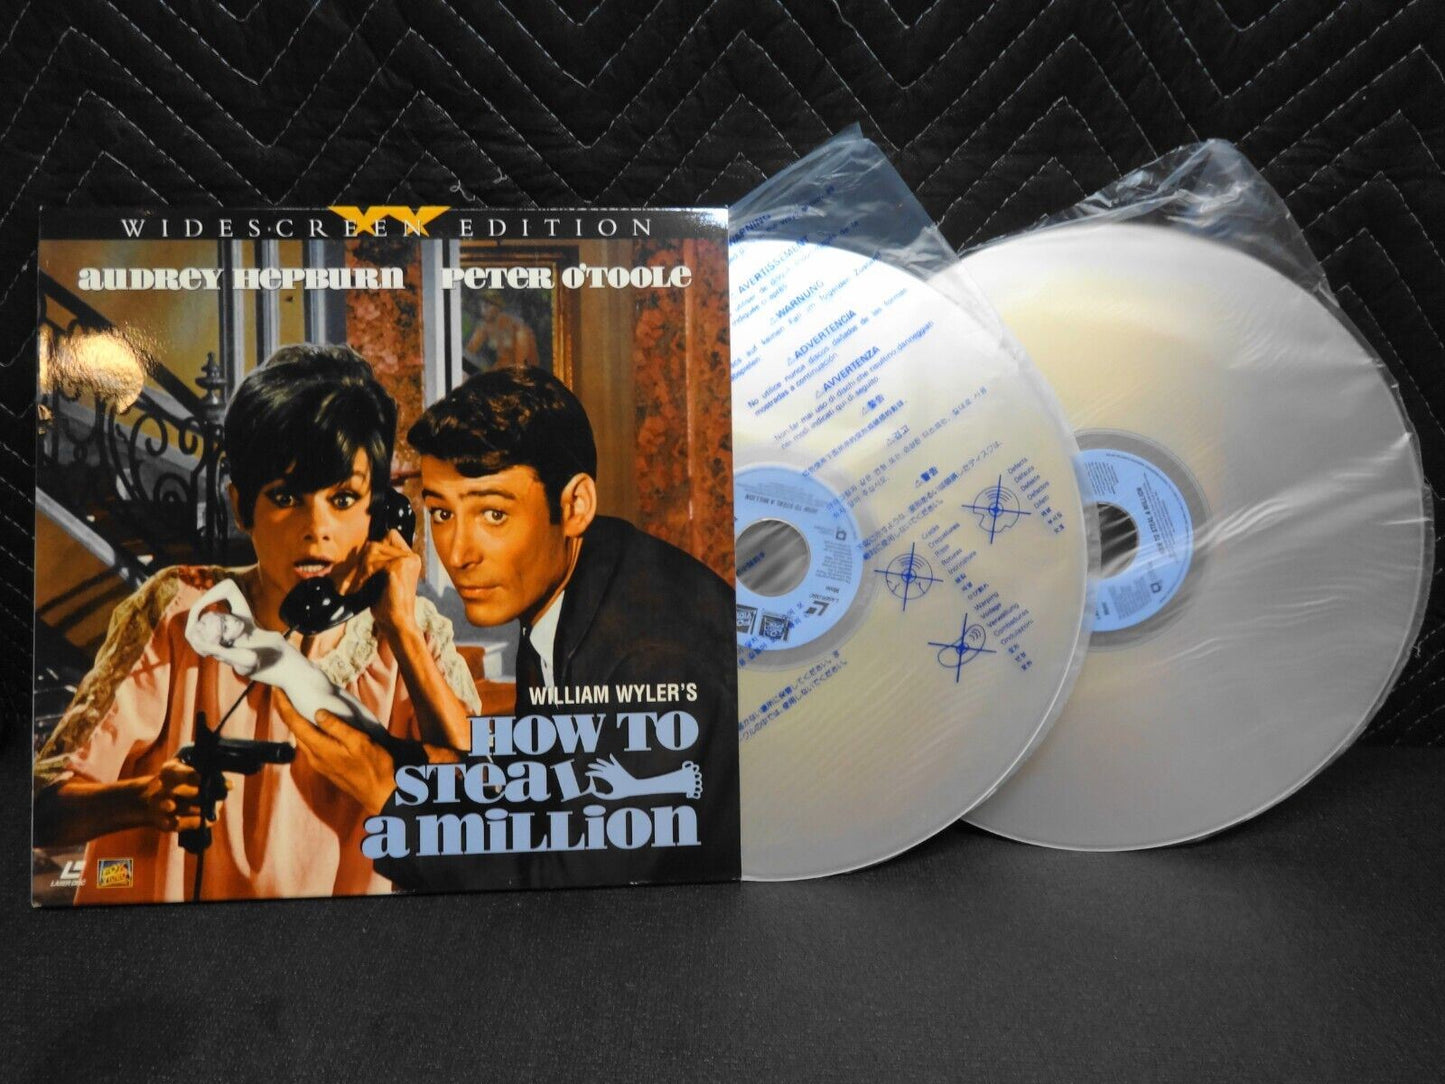 HOW TO STEAL A MILLION Laserdisc LD WIDESCREEN Audrey Hepburn Peter O'Toole